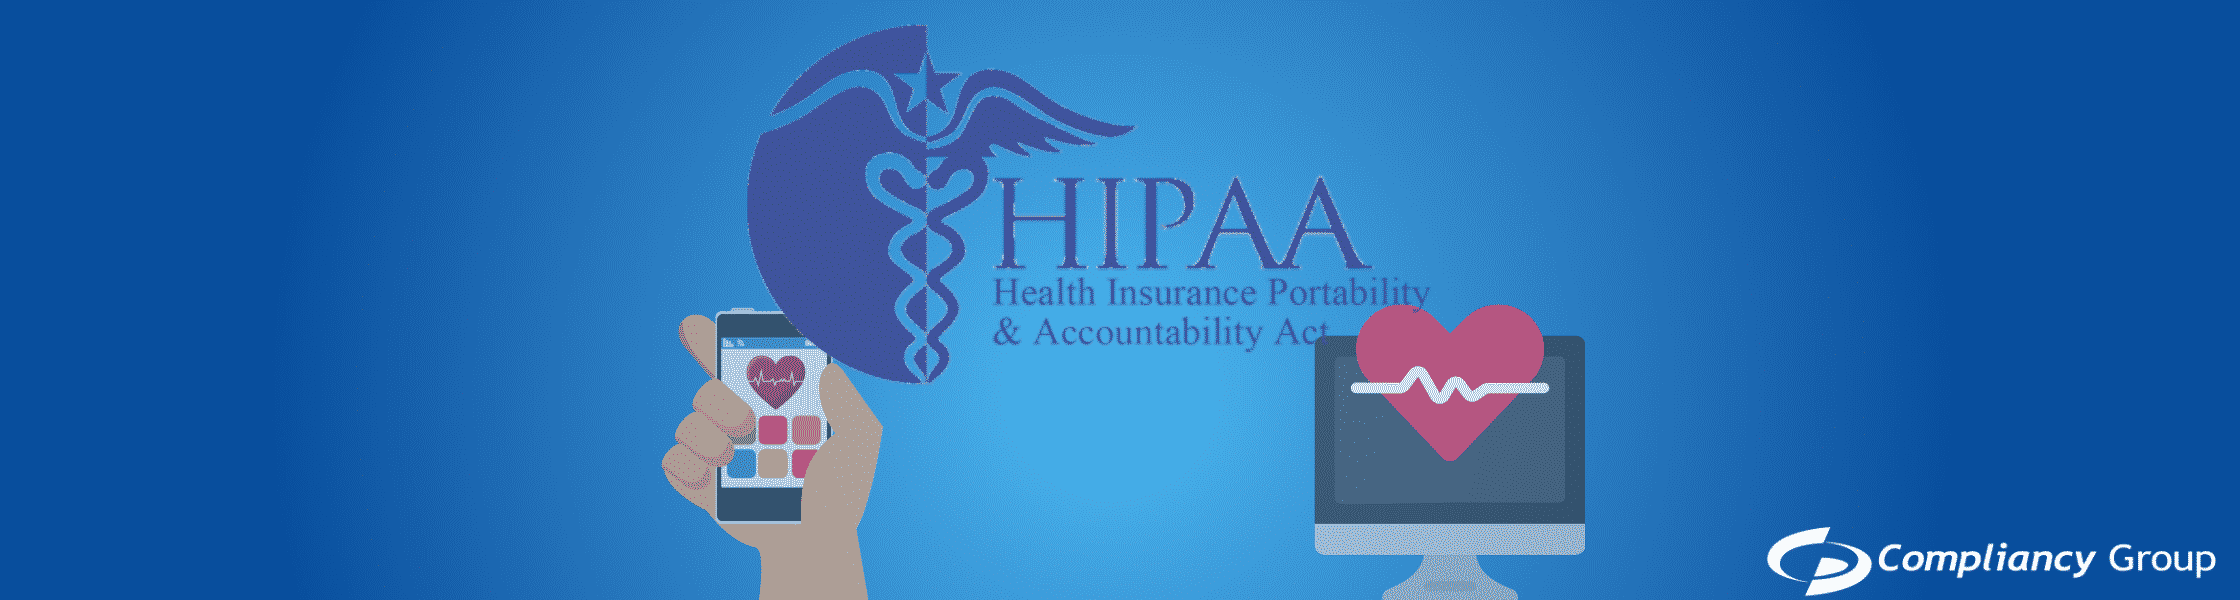 hipaa compliance tools